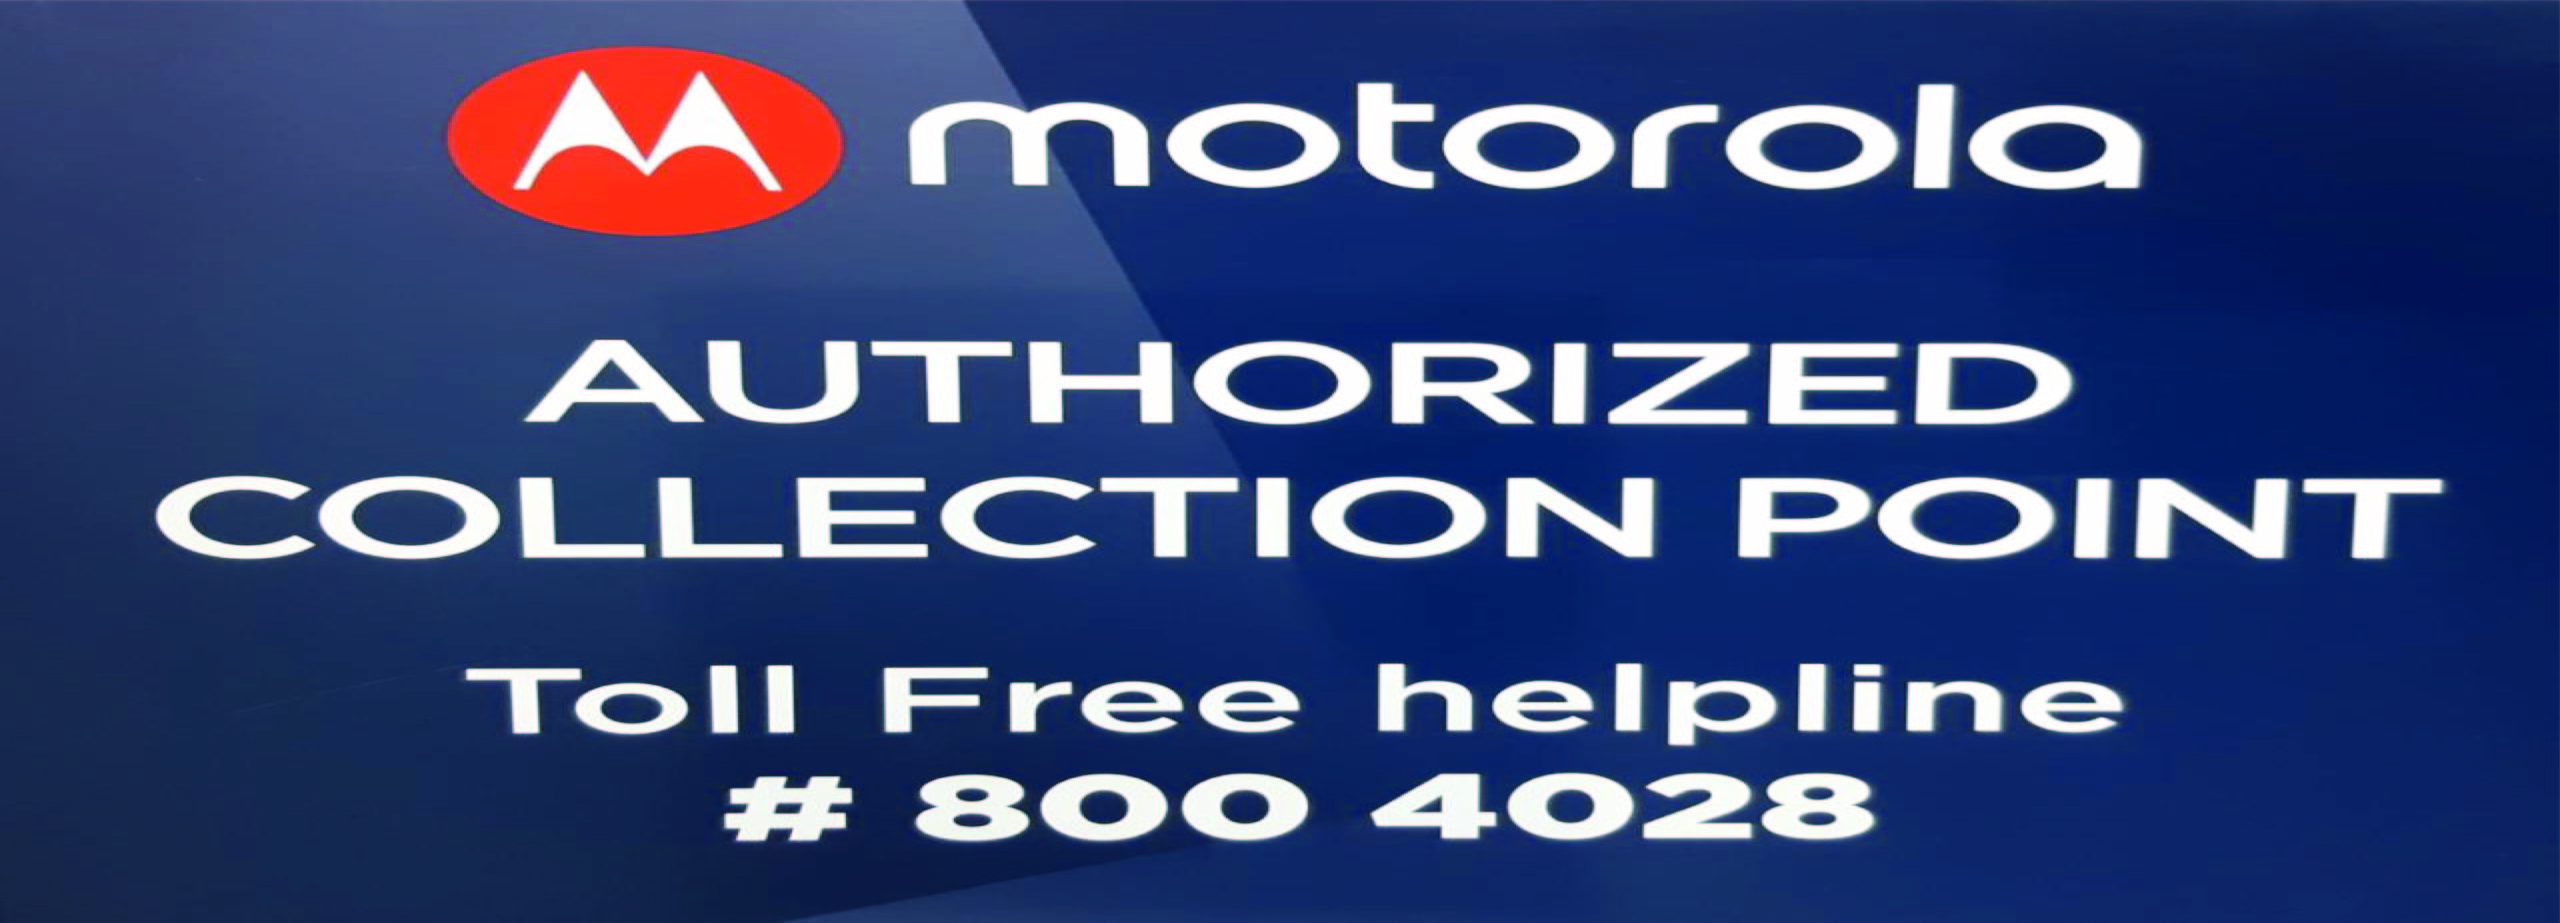 Motorola Authorized Collection Point